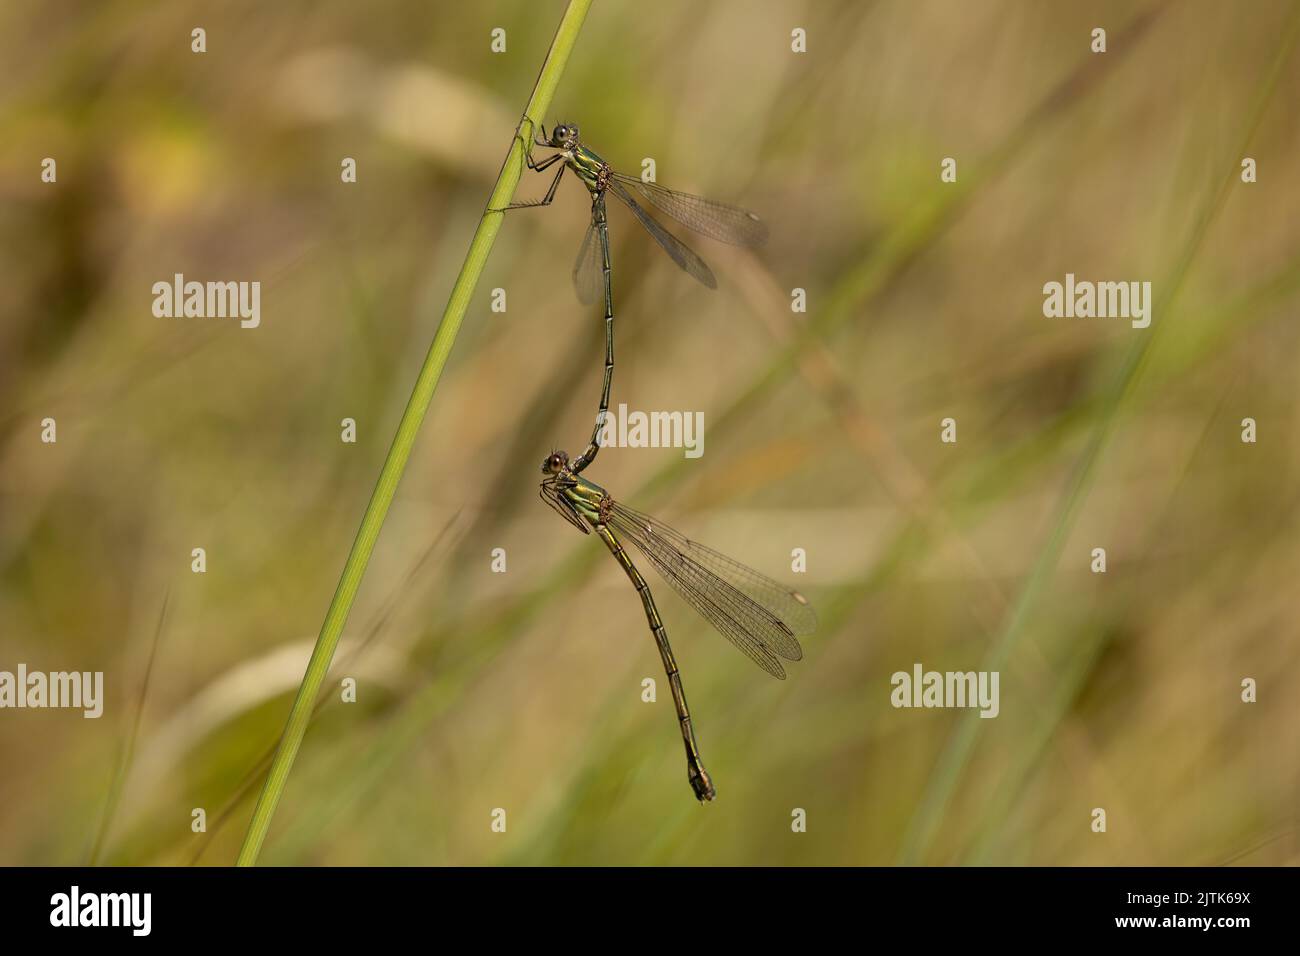 Paarungsweiden Smaragddamselflies. Stockfoto